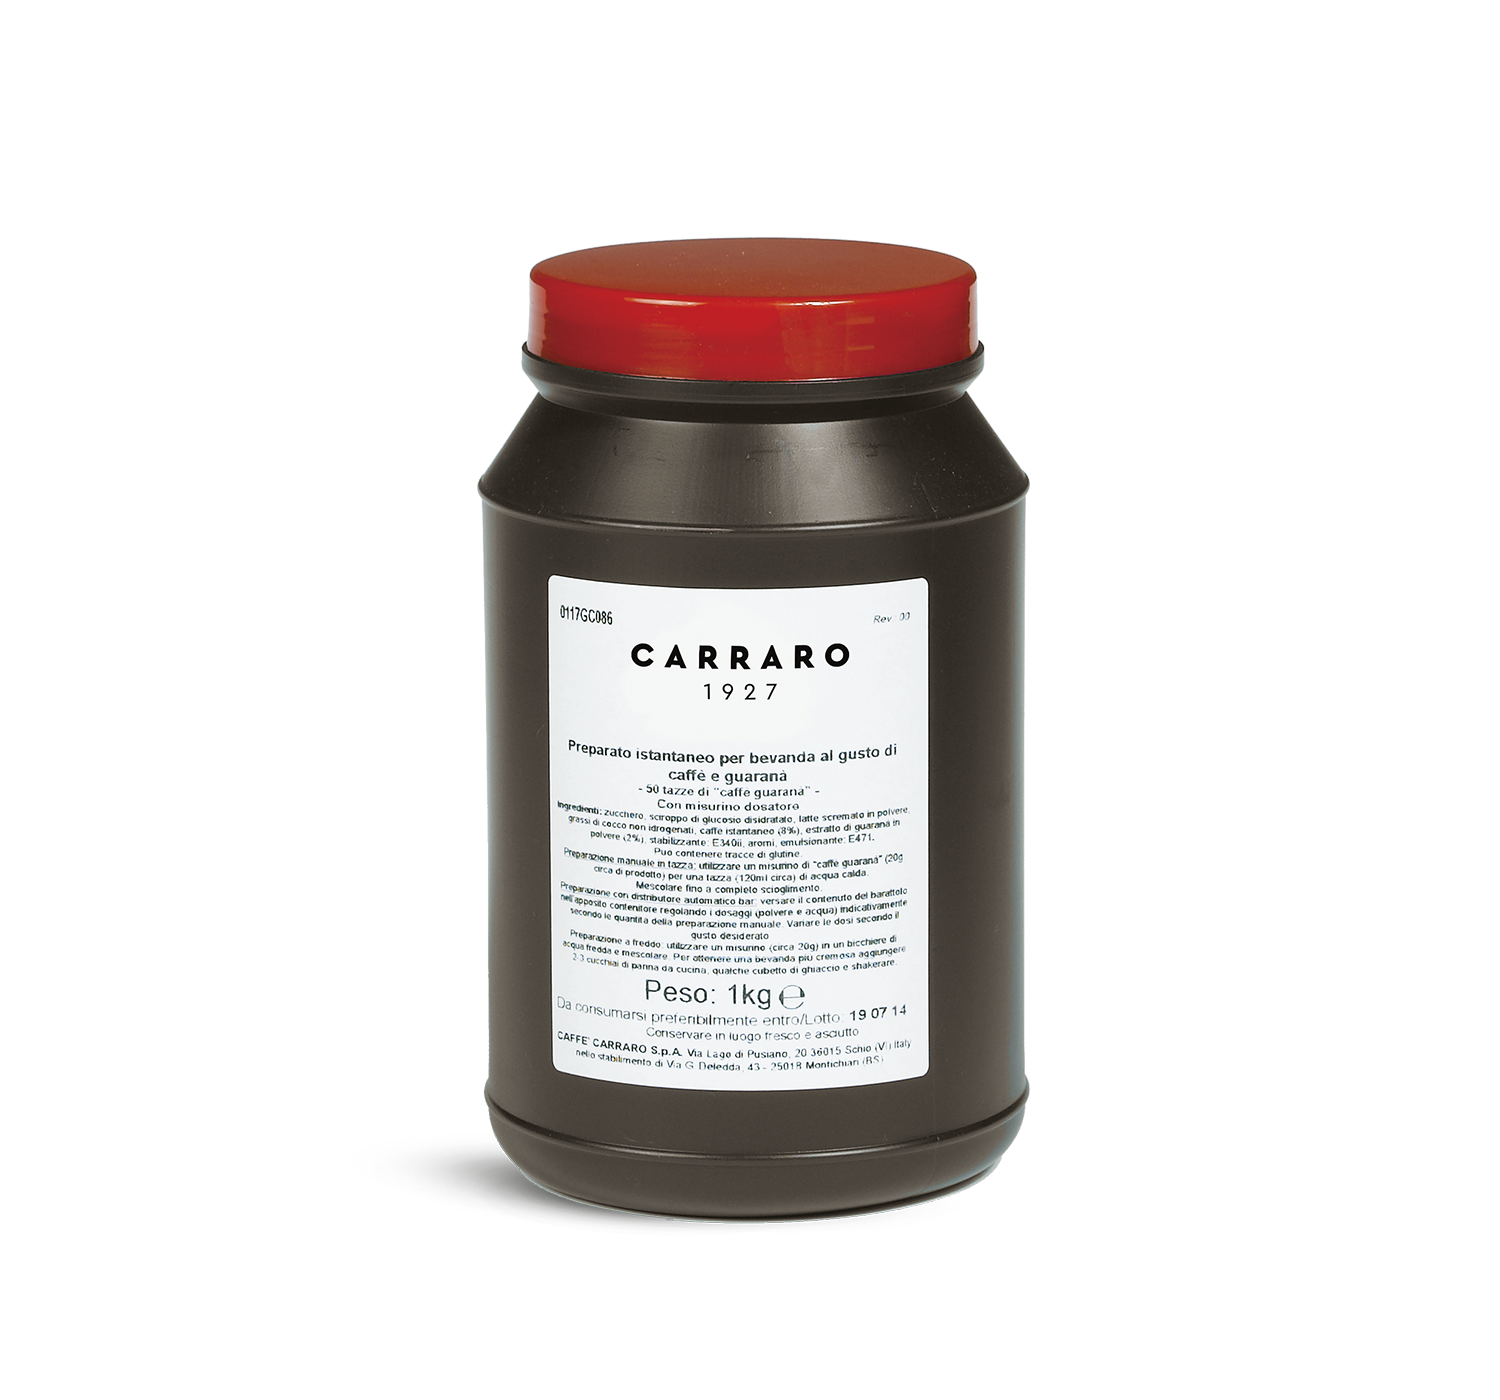 Ho.Re.Ca. - Instat product for Caffè and Guaranà flavoured drink – 1000 g - Shop online Caffè Carraro